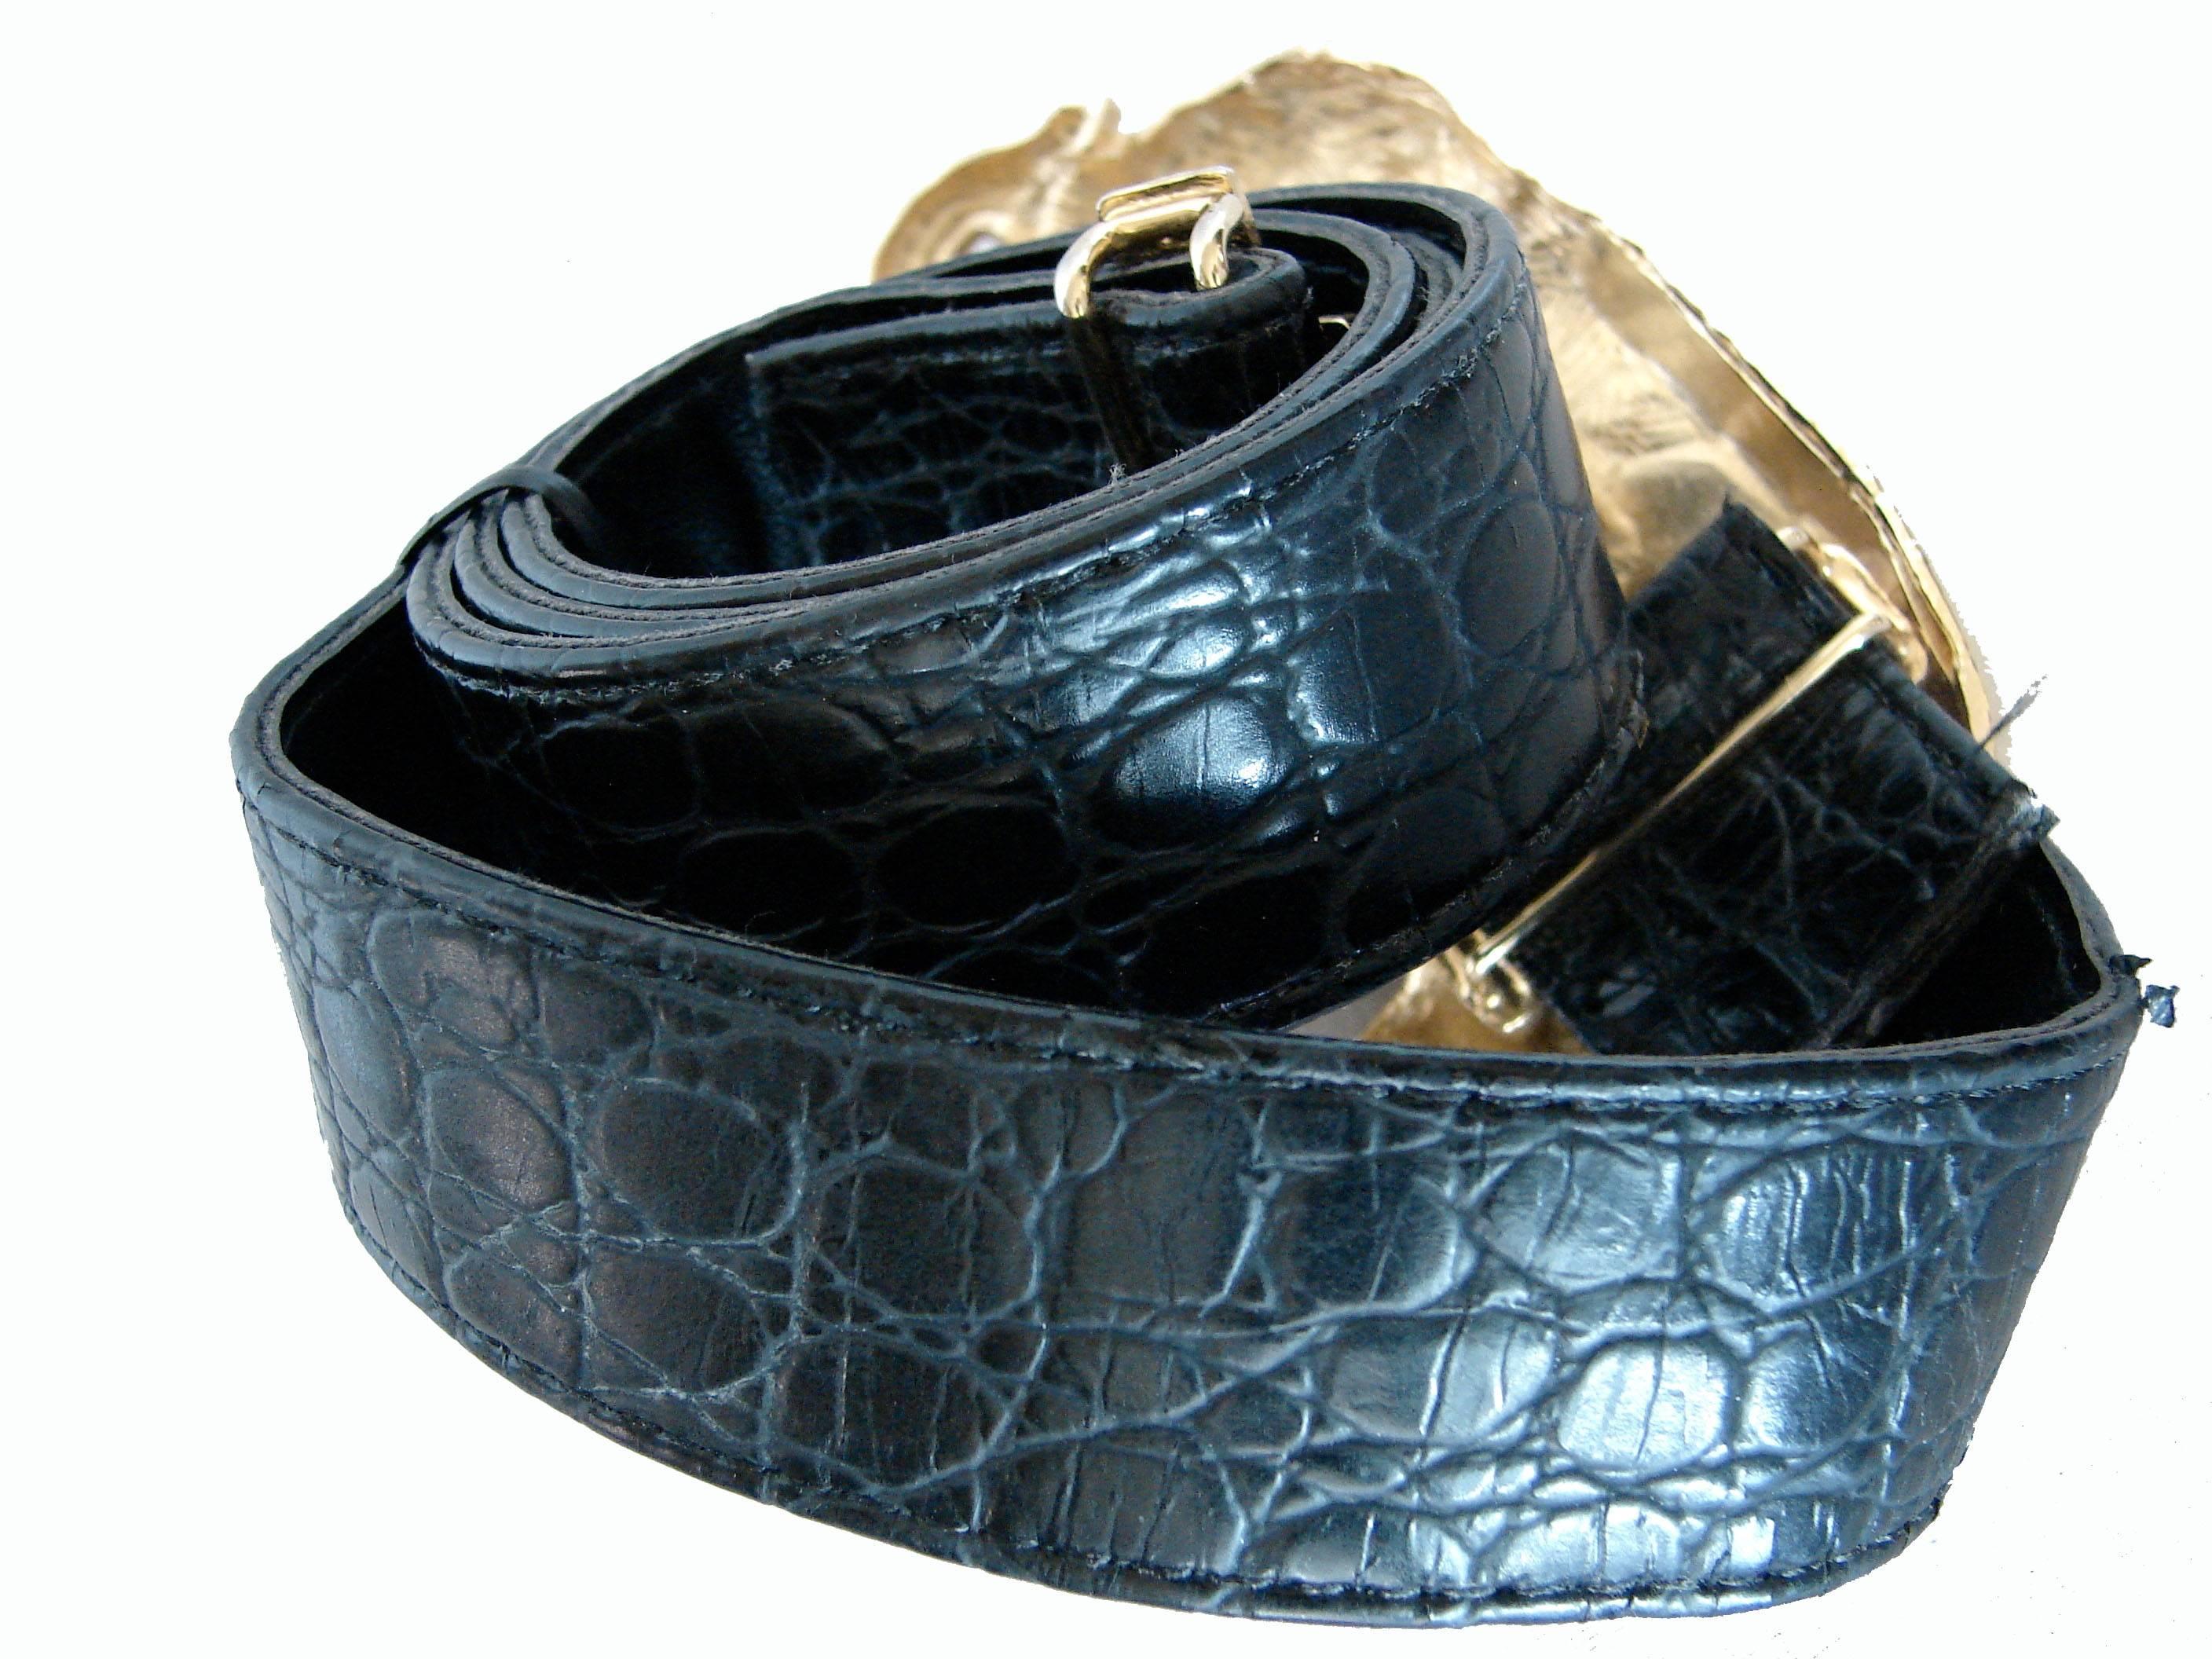 Gold Rhinestone Elephant Buckle + Black Leather Belt Strap Hattie Carnegie Attr 1